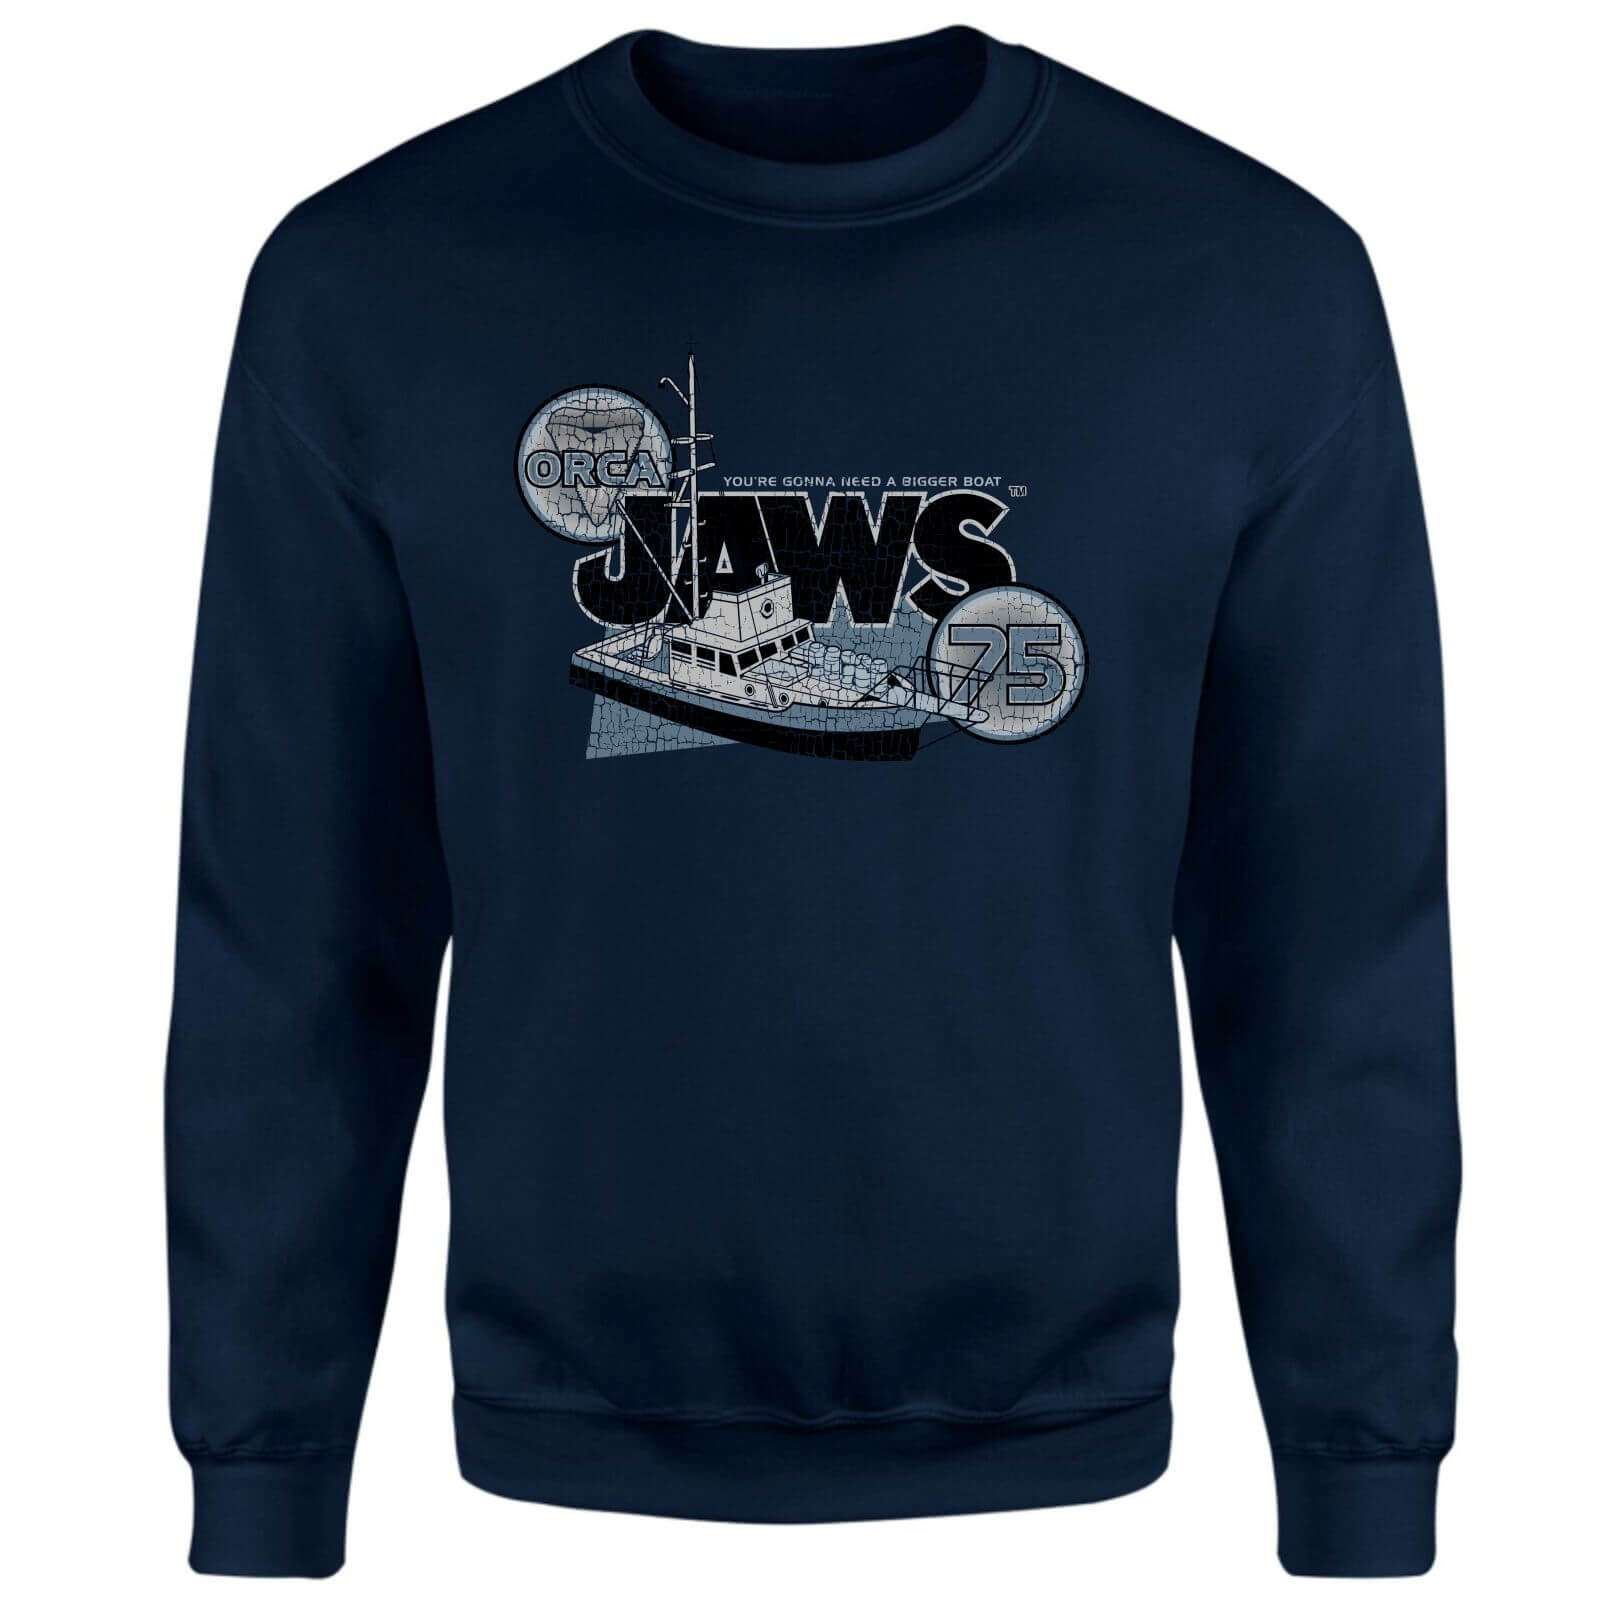 Universal Jaws Orca 75 Sweatshirt - Navy - XS - Navy